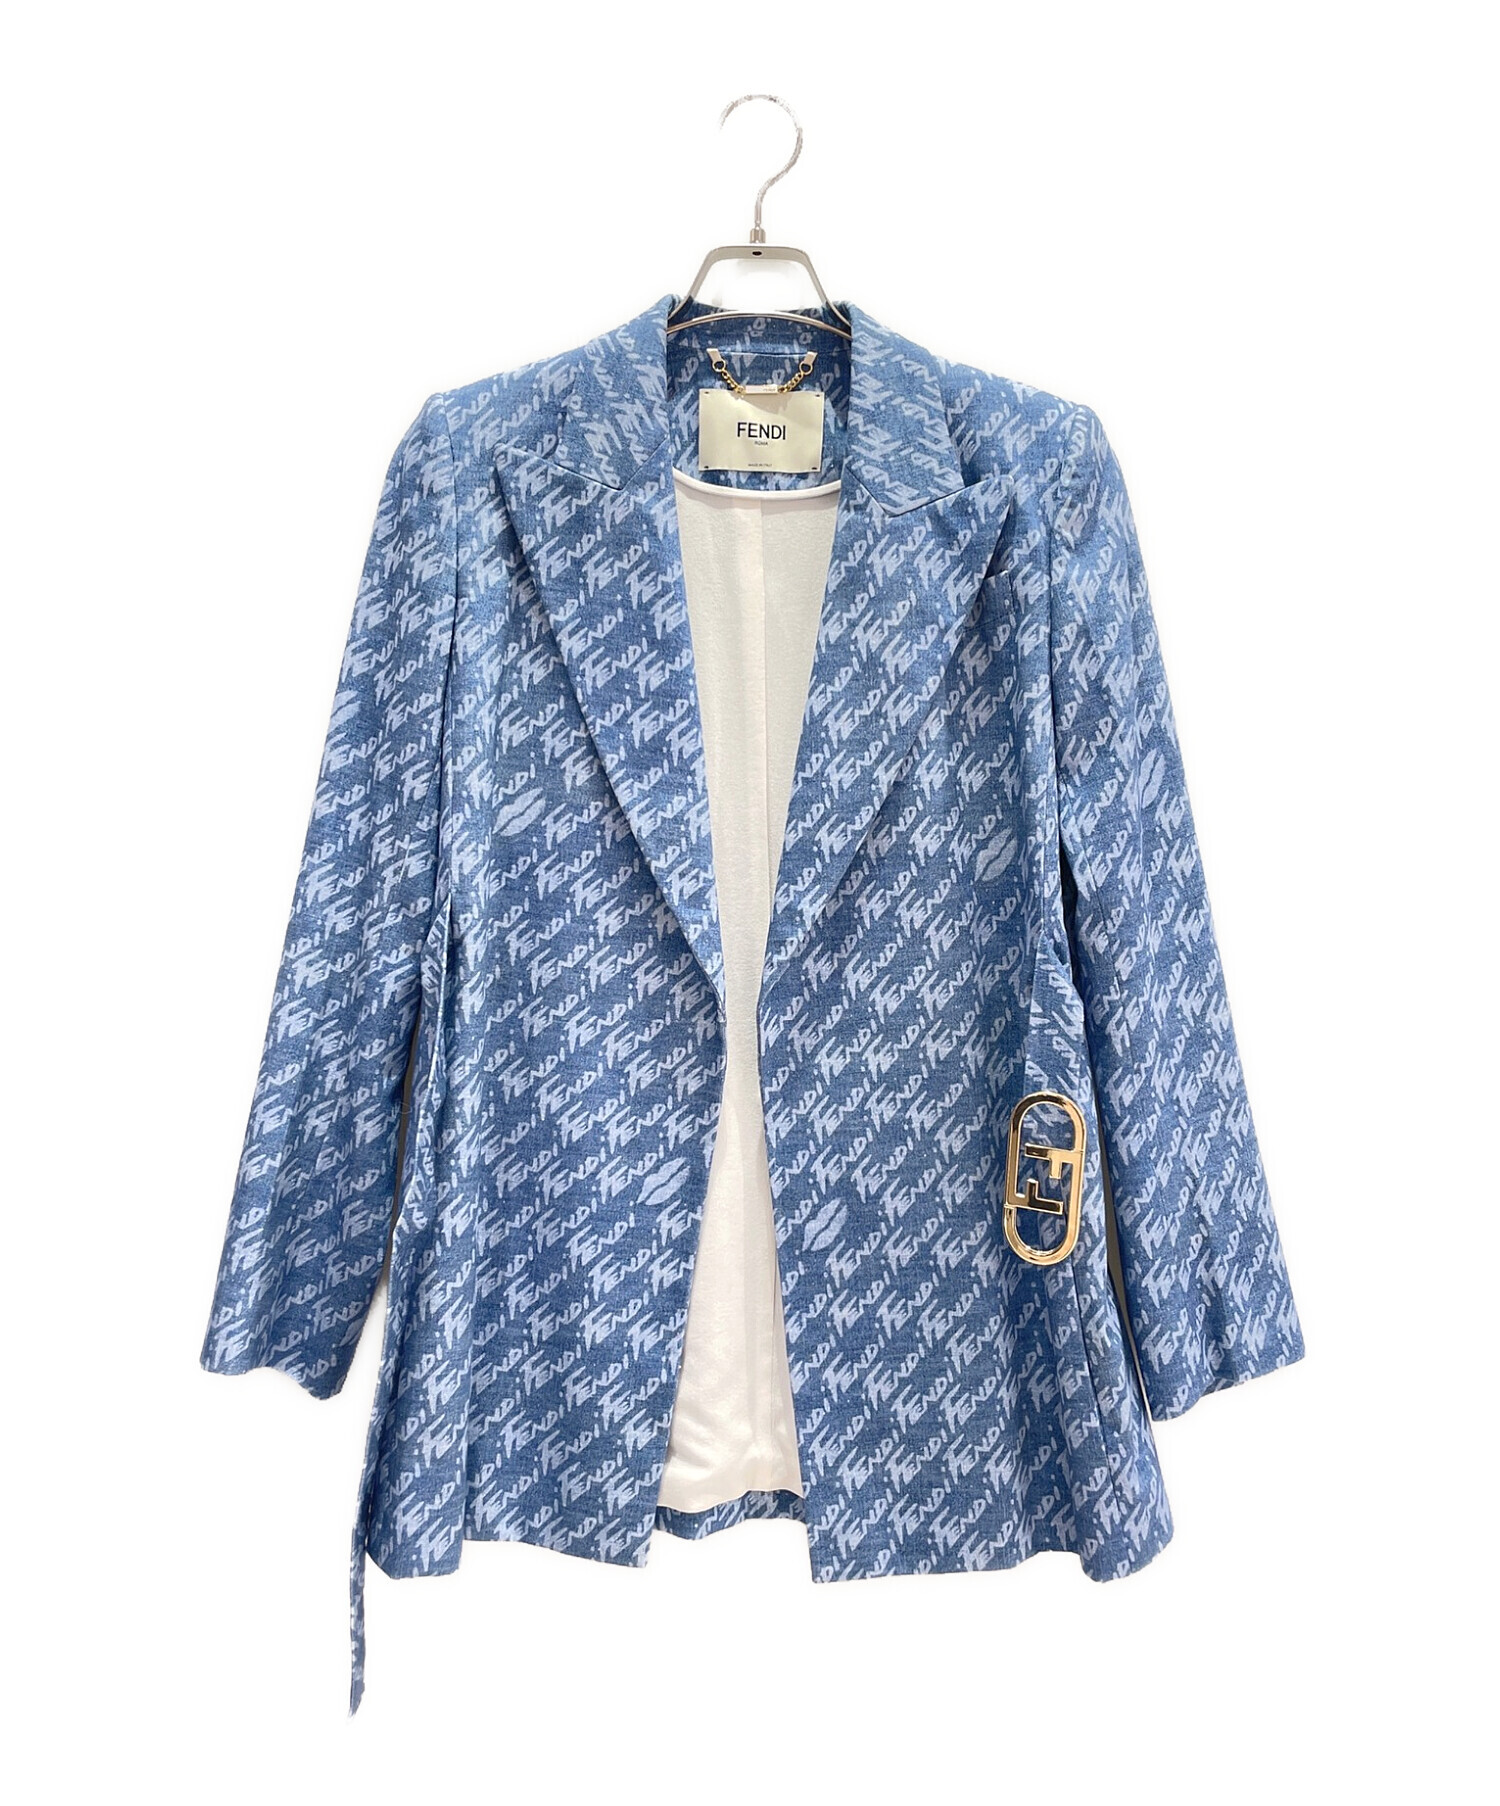 FENDI (フェンディ) Chambray jacket ブルー サイズ:40